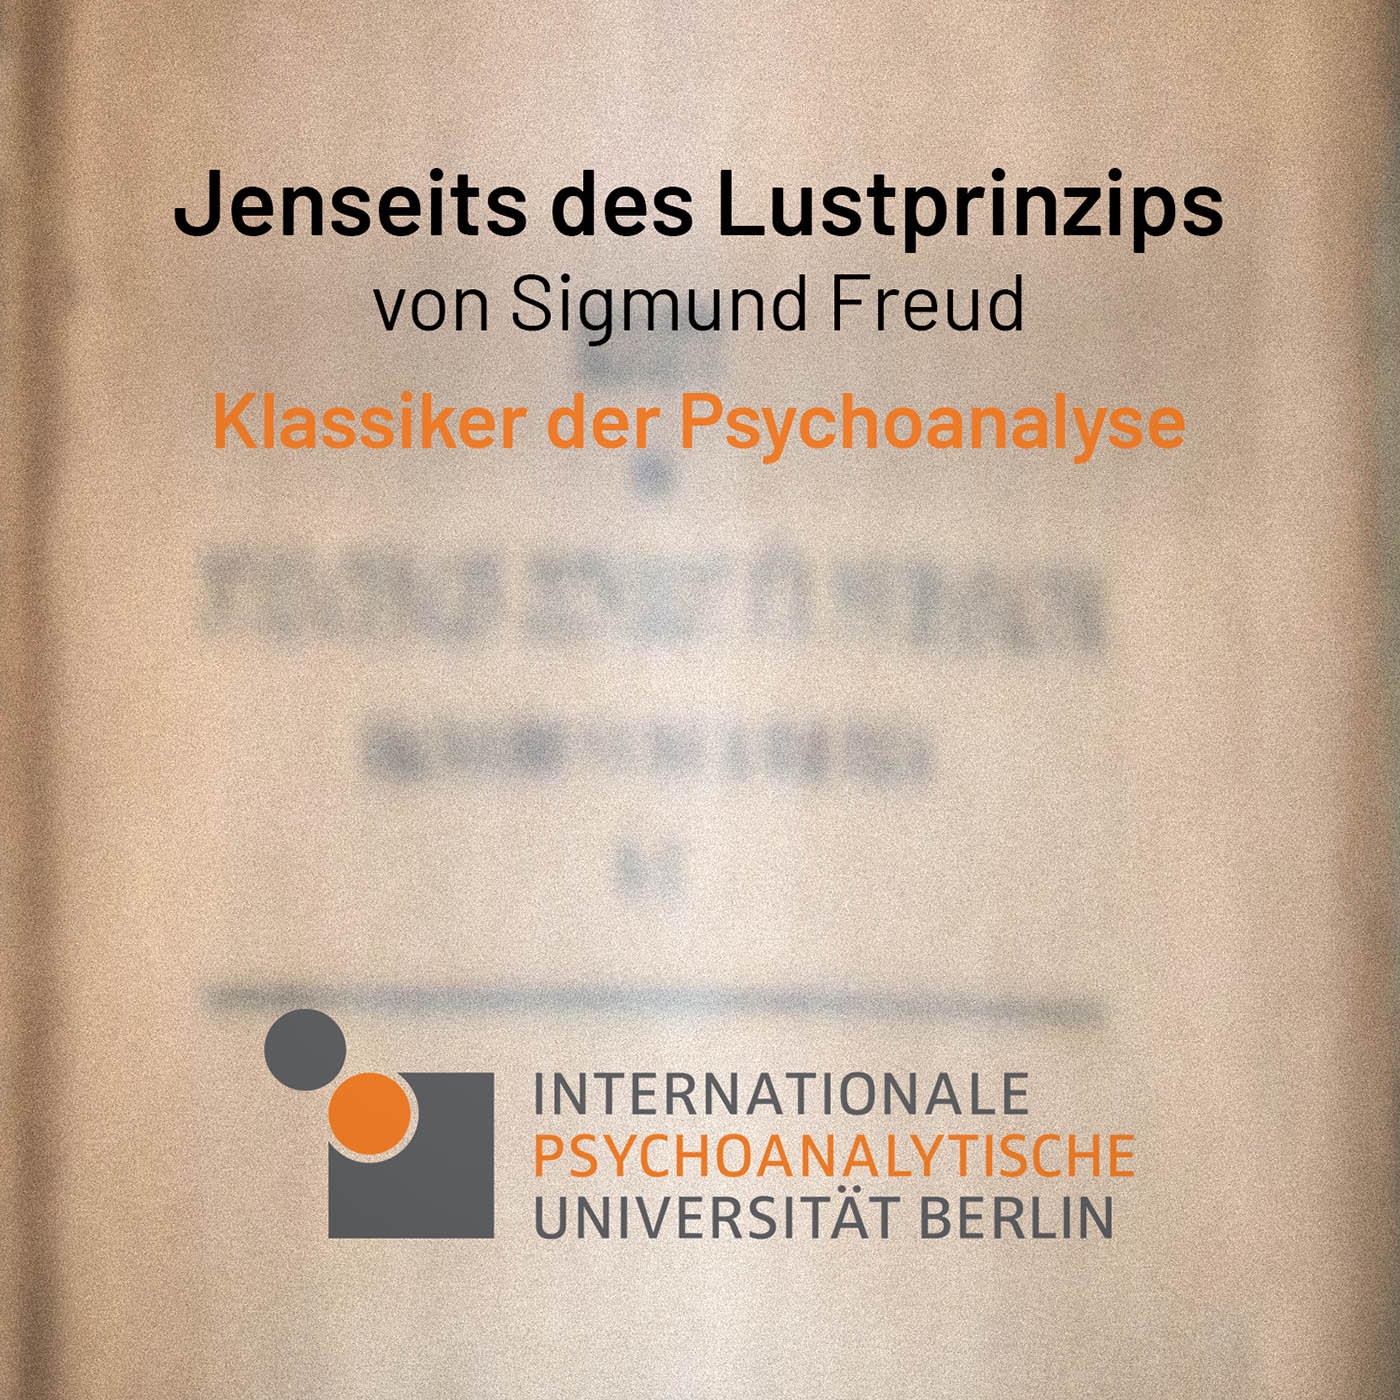 Klassiker der Psychoanalyse: Jenseits des Lustprinzips (Teil 1)